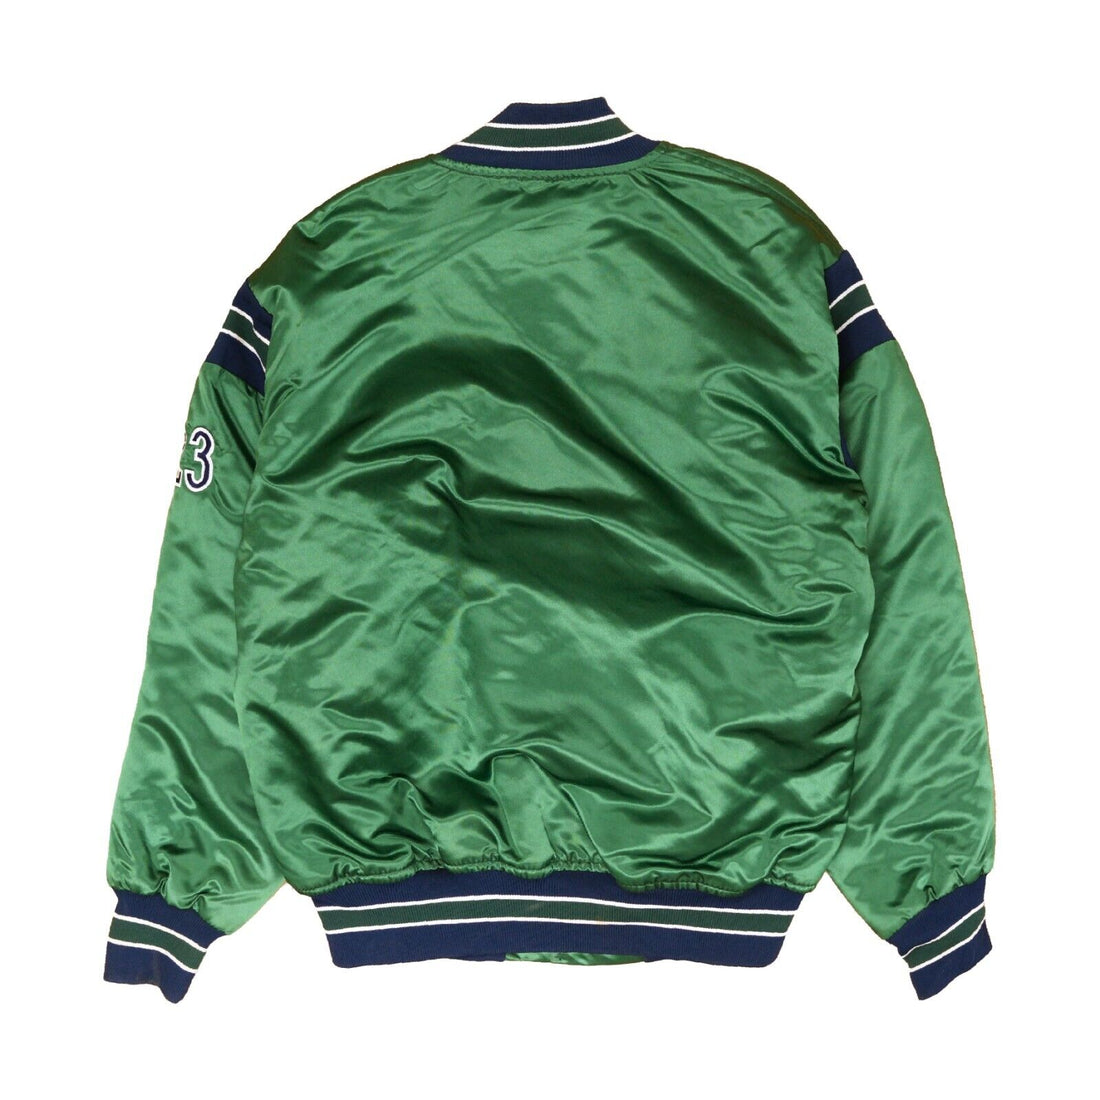 Vintage Mercyhurst Softball Satin Bomber Jacket Size Medium Green Made USA 90s